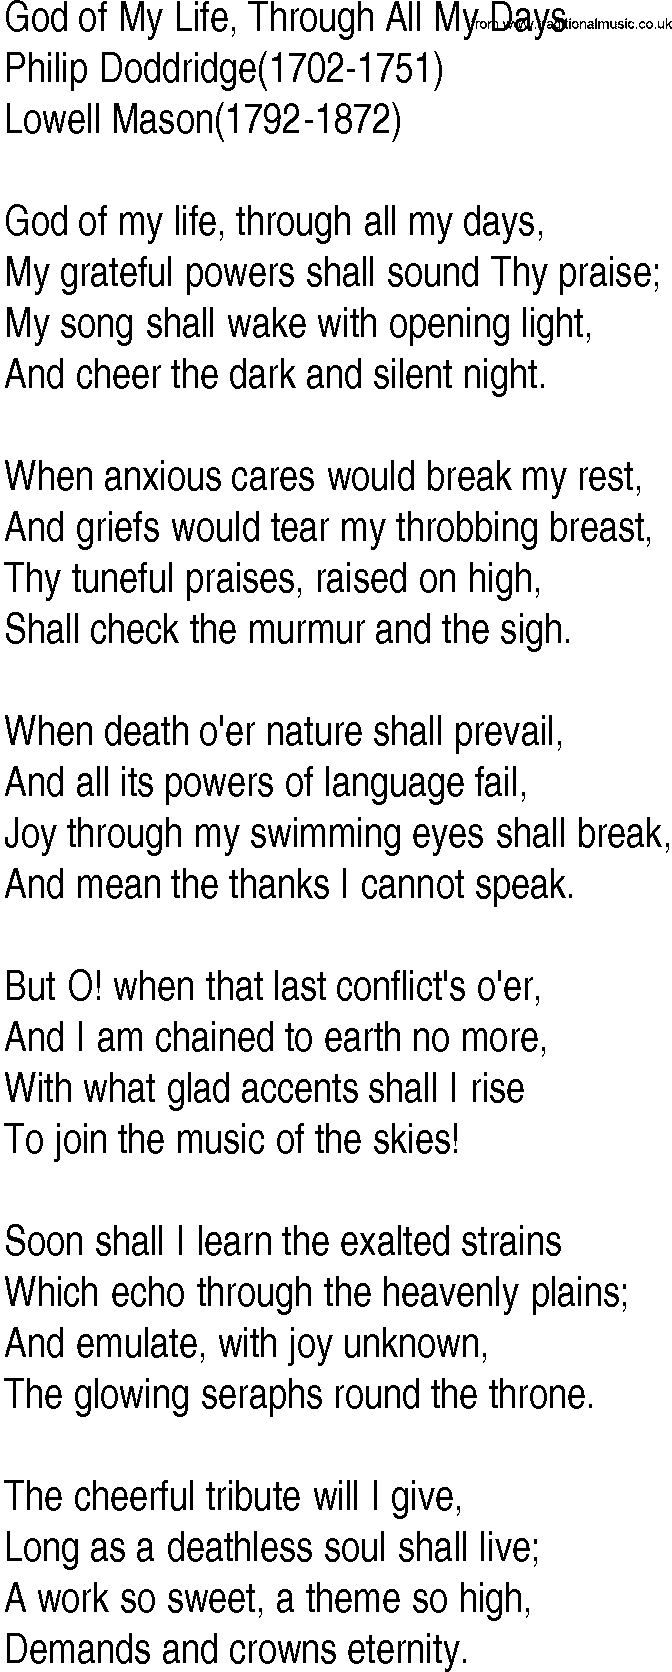 Hymn and Gospel Song: God of My Life, Through All My Days by Philip Doddridge lyrics